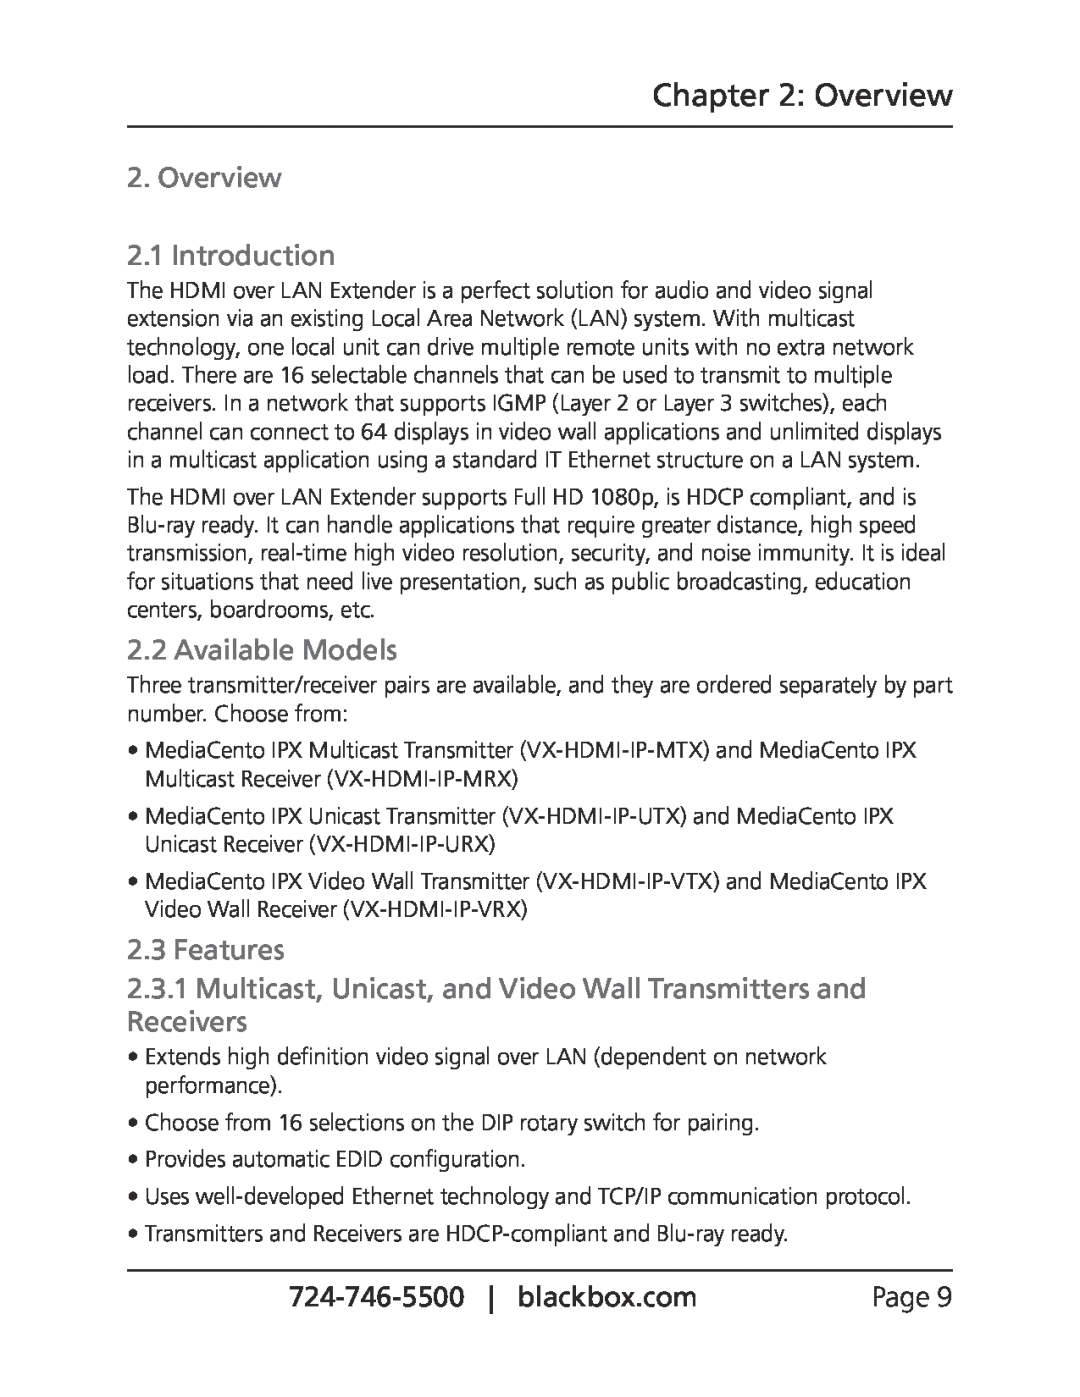 Black Box VX-HDMI-IP-VRX, VX-HDMI-IP-VTX, VX-HDMI-IP-MRX manual Overview 2.1 Introduction, Available Models, Features 